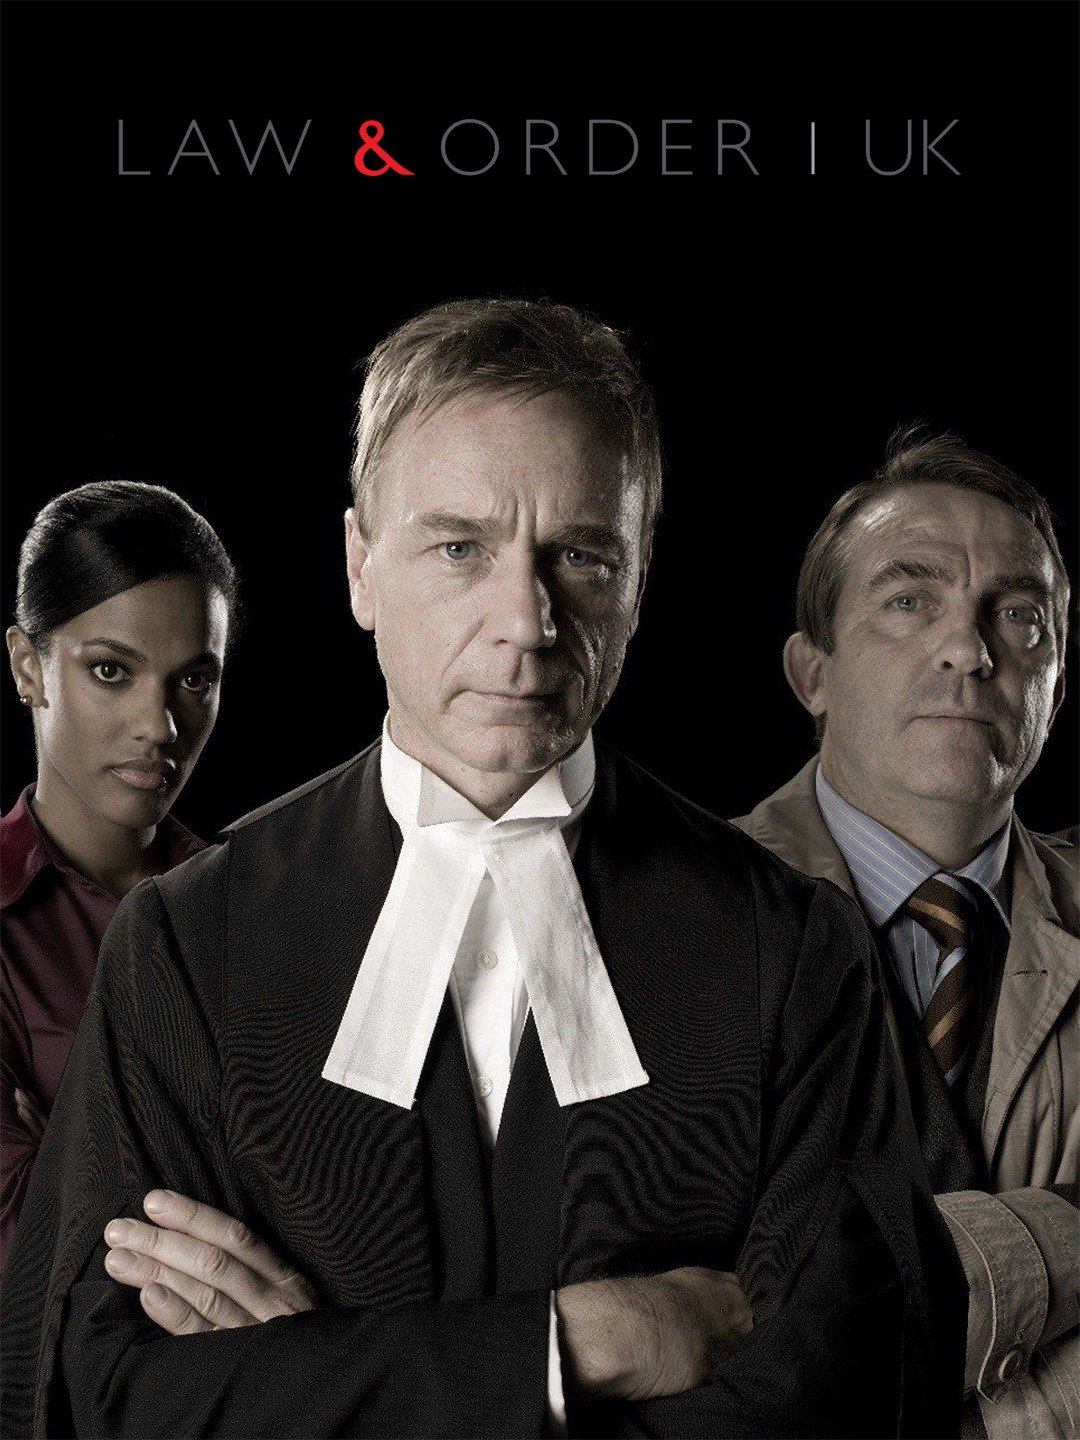 Law & Order UK: Season Two/ [DVD]